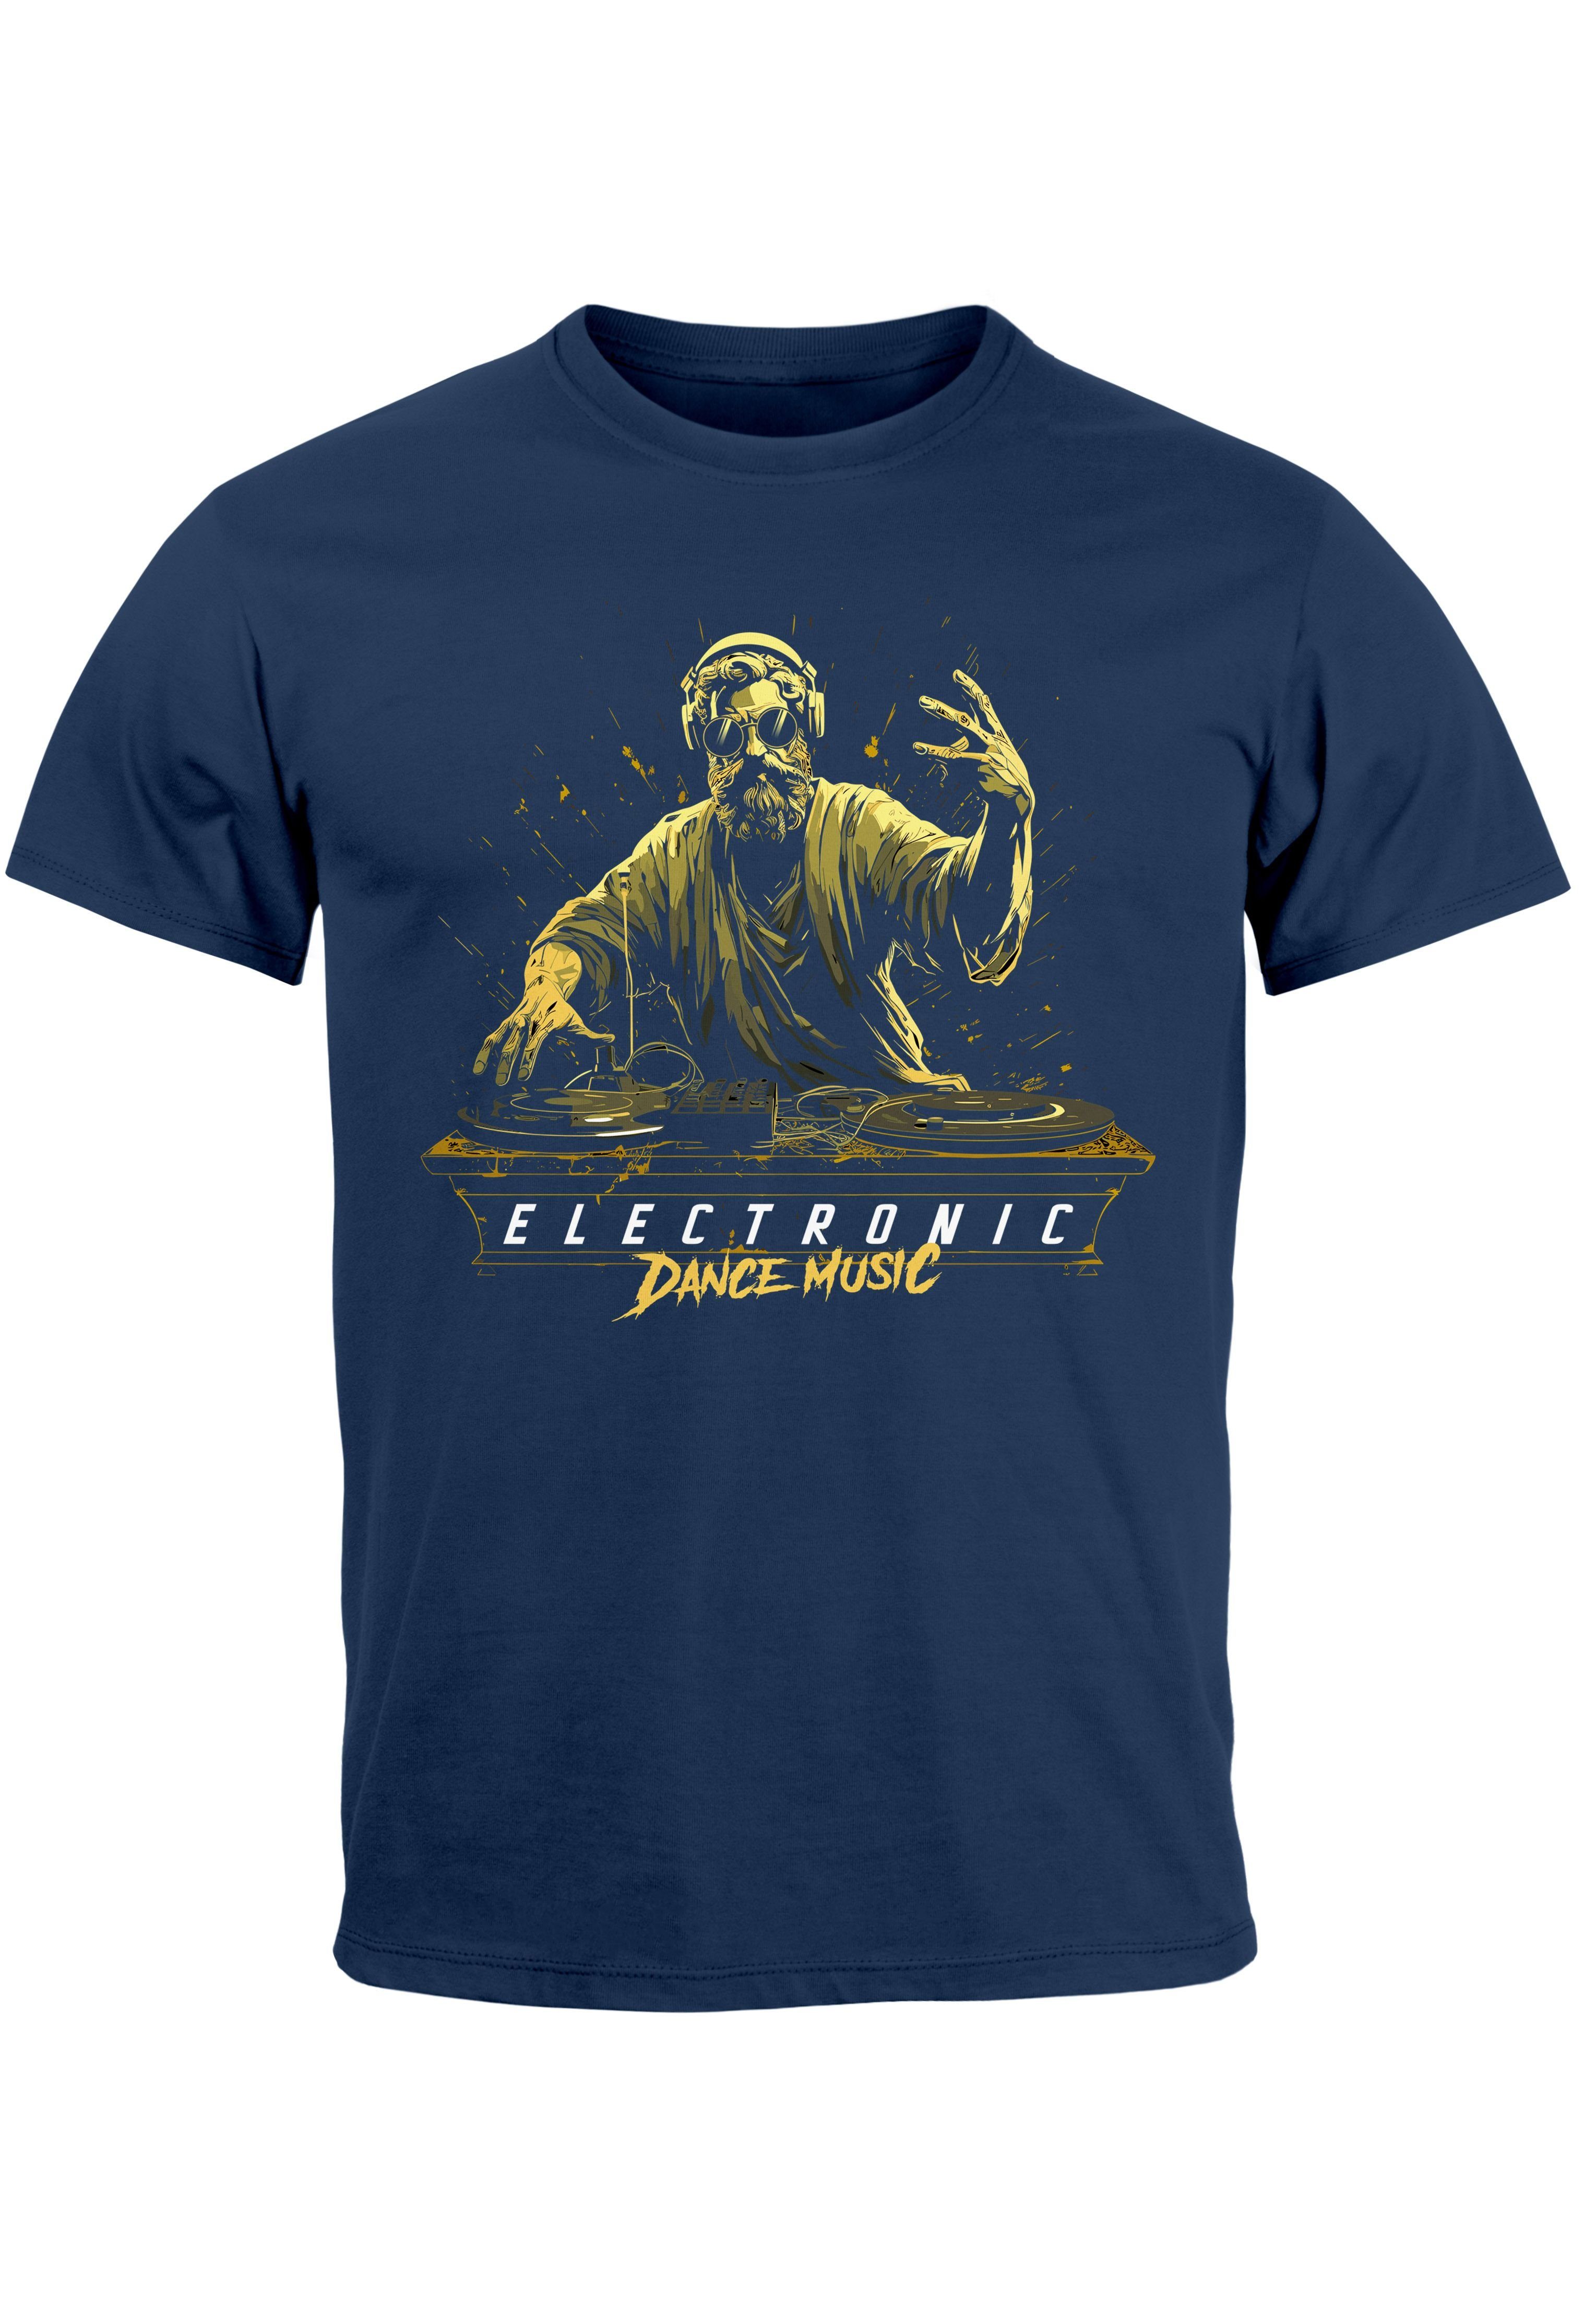 MichelangeloTechno Print-Shirt Fashion navy Eletronic Music Dance Str T-Shirt Herren mit Neverless Print DJ